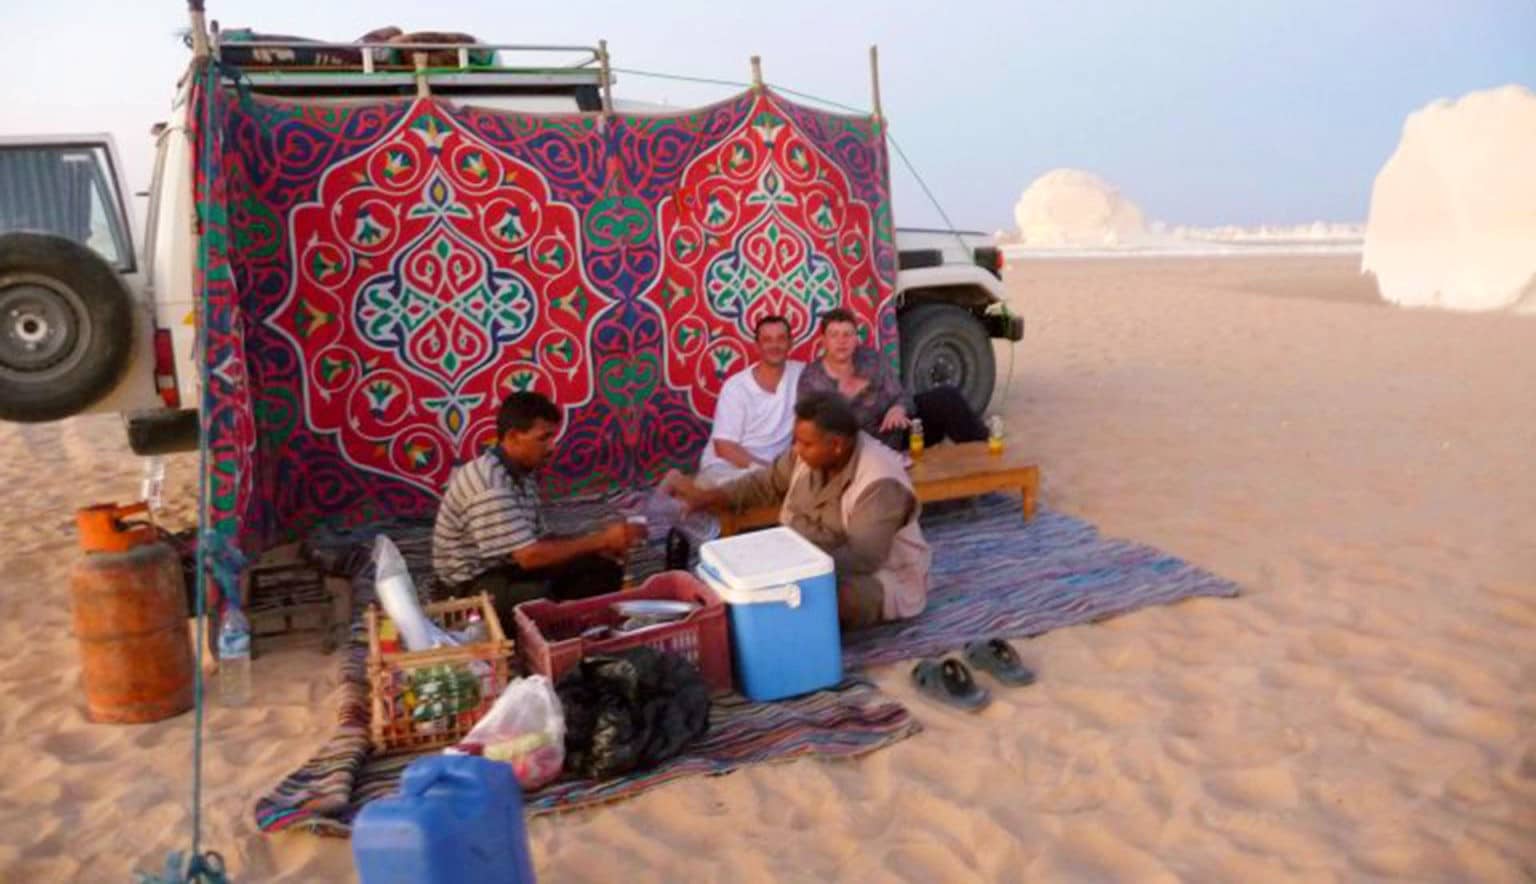 Vacances en Egypte sur mesure I Laurent Guerreiro Juillet 2008